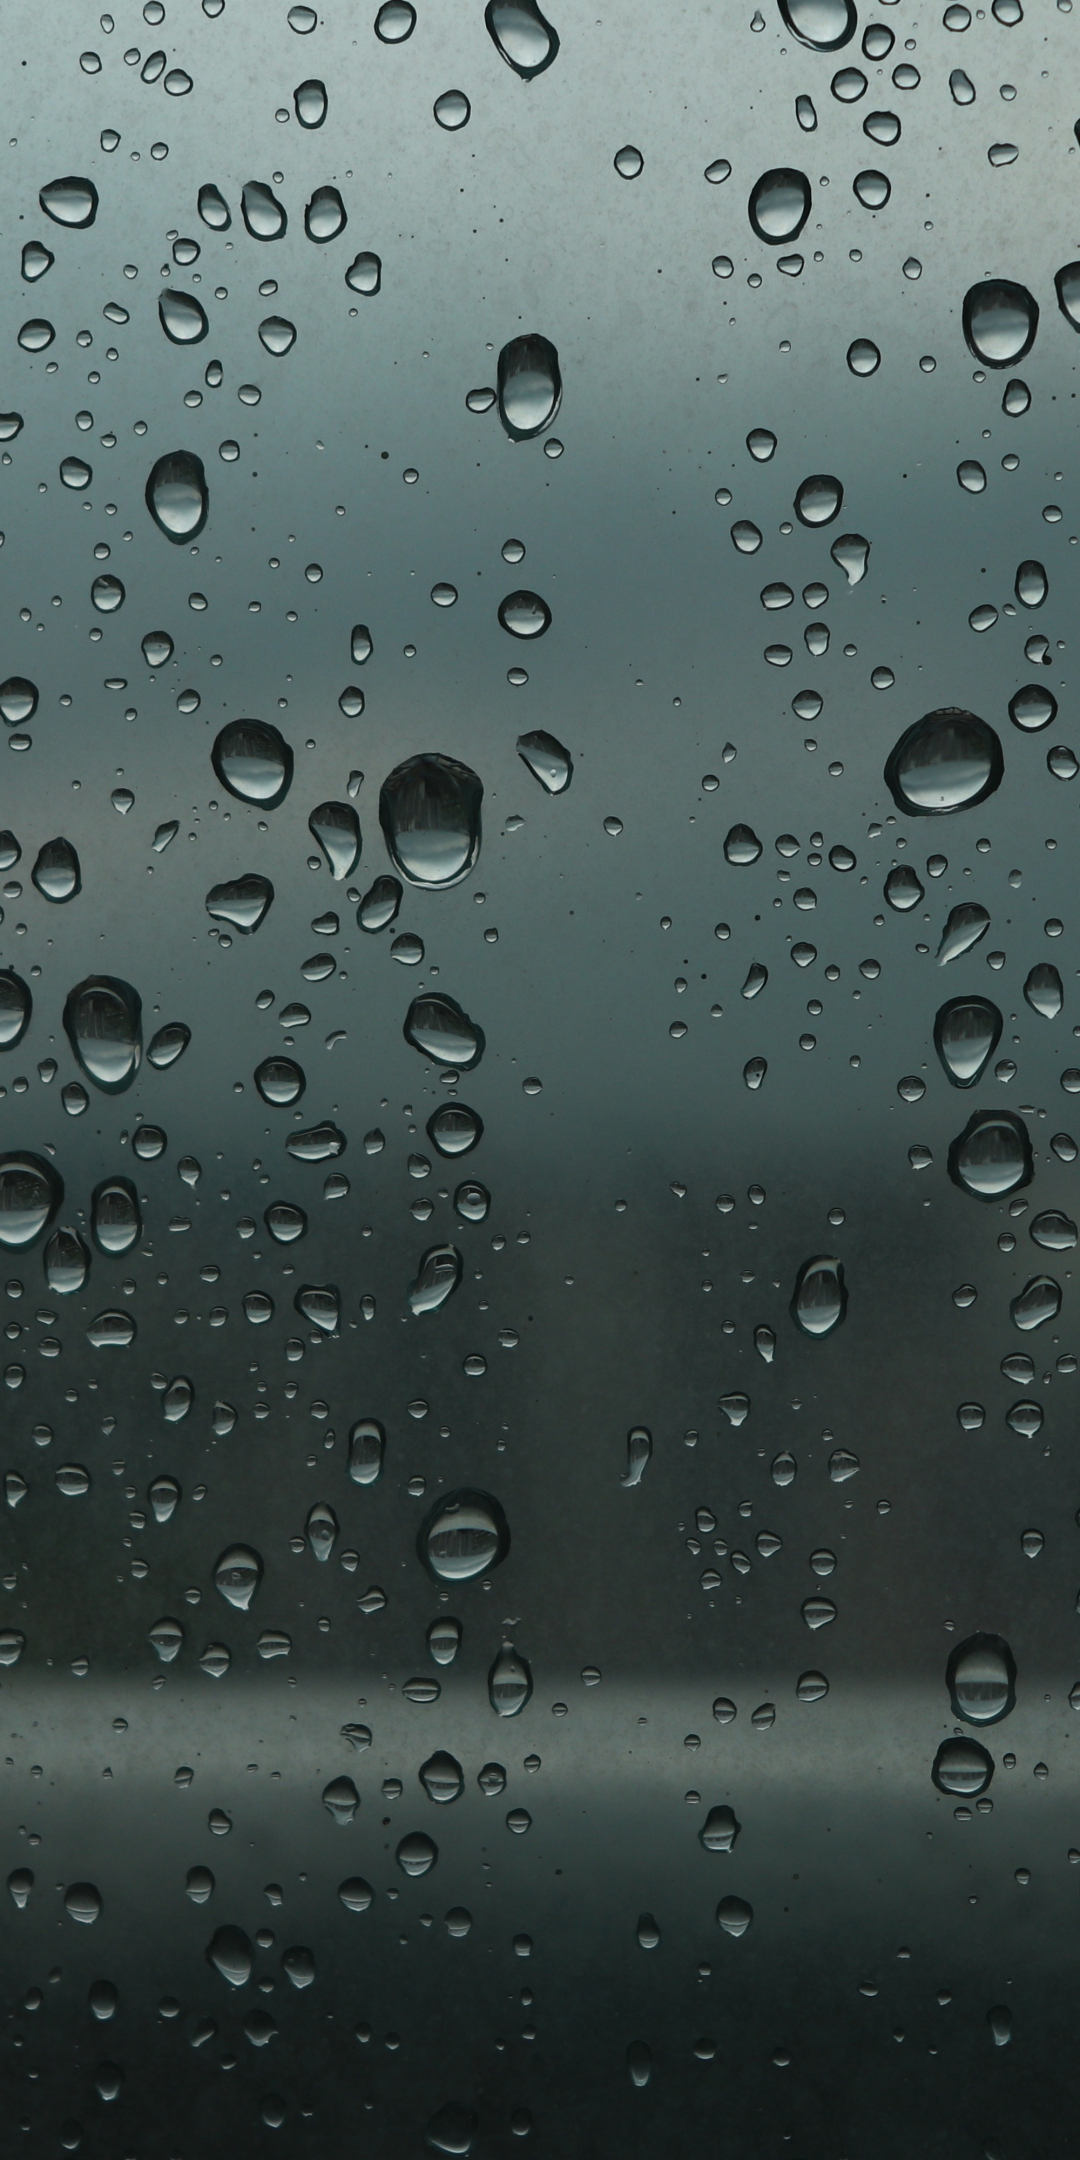 Water Drops, glass's wet surface, 1080x2160 wallpaper